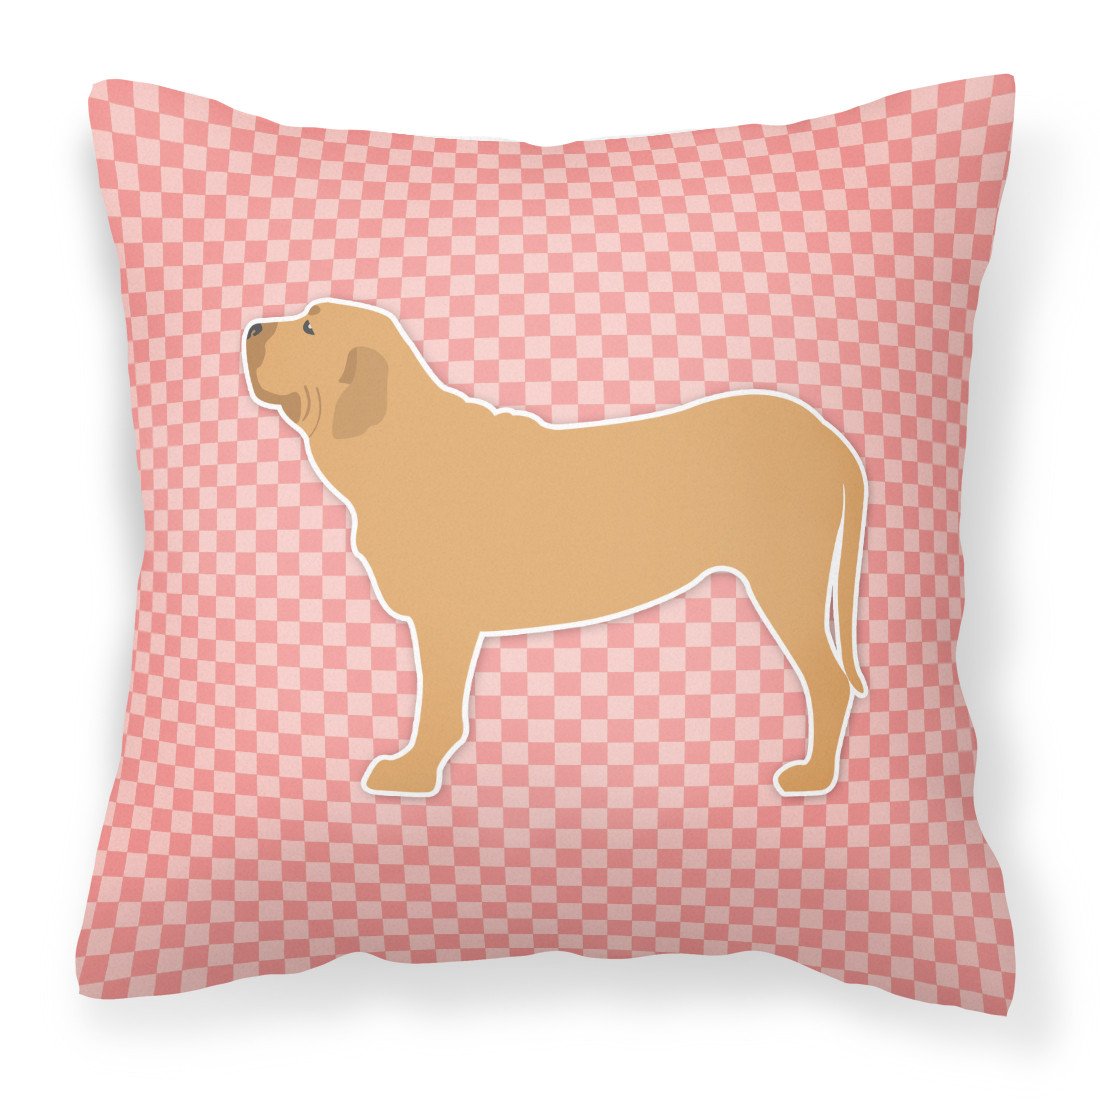 Fila Brasileiro Checkerboard Pink Fabric Decorative Pillow BB3679PW1818 by Caroline's Treasures